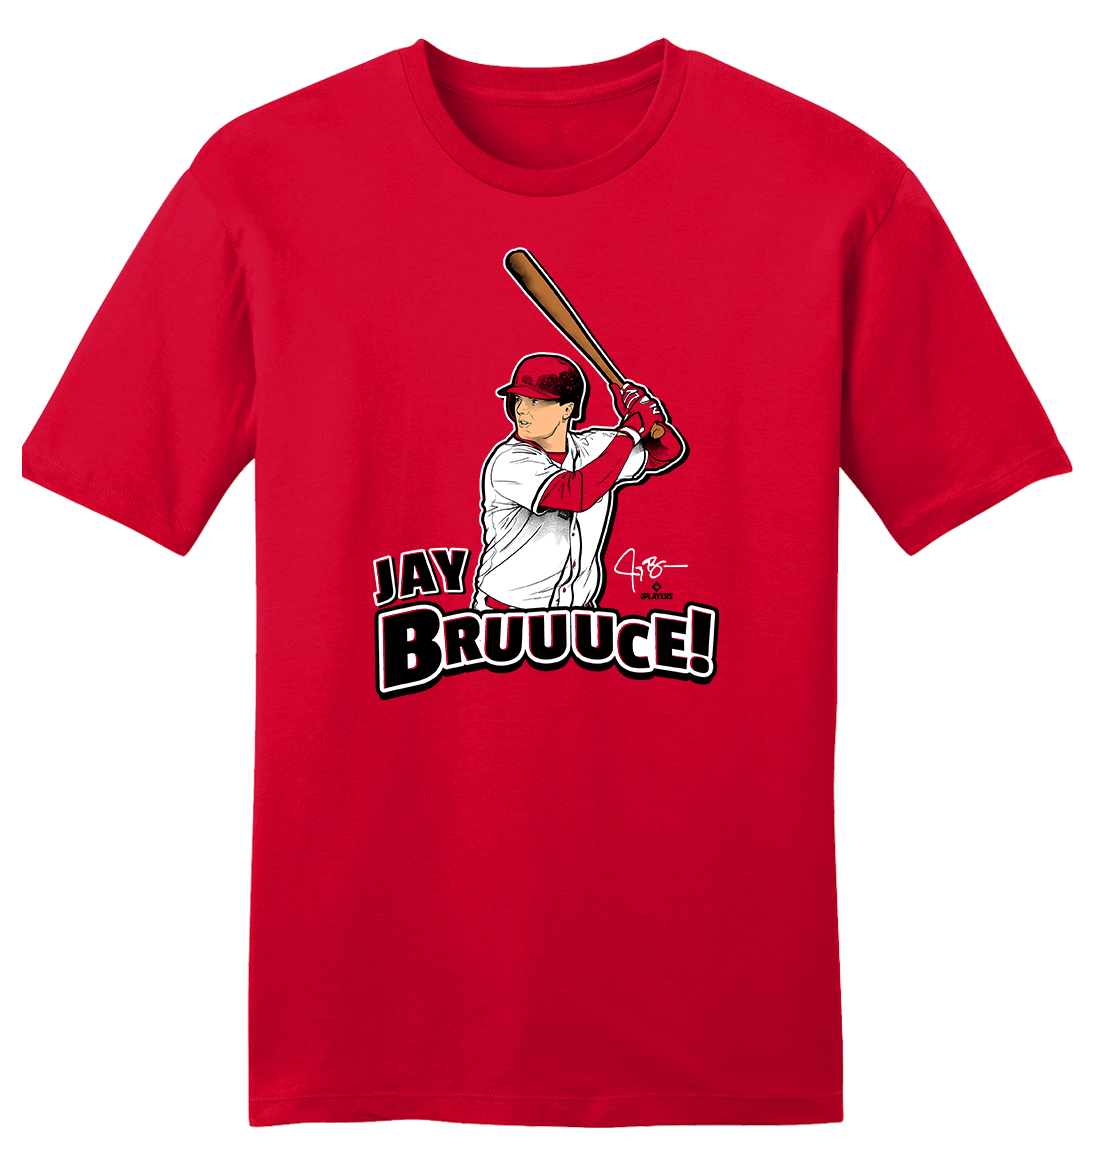 Jay Bruuuce! - Cincy Shirts